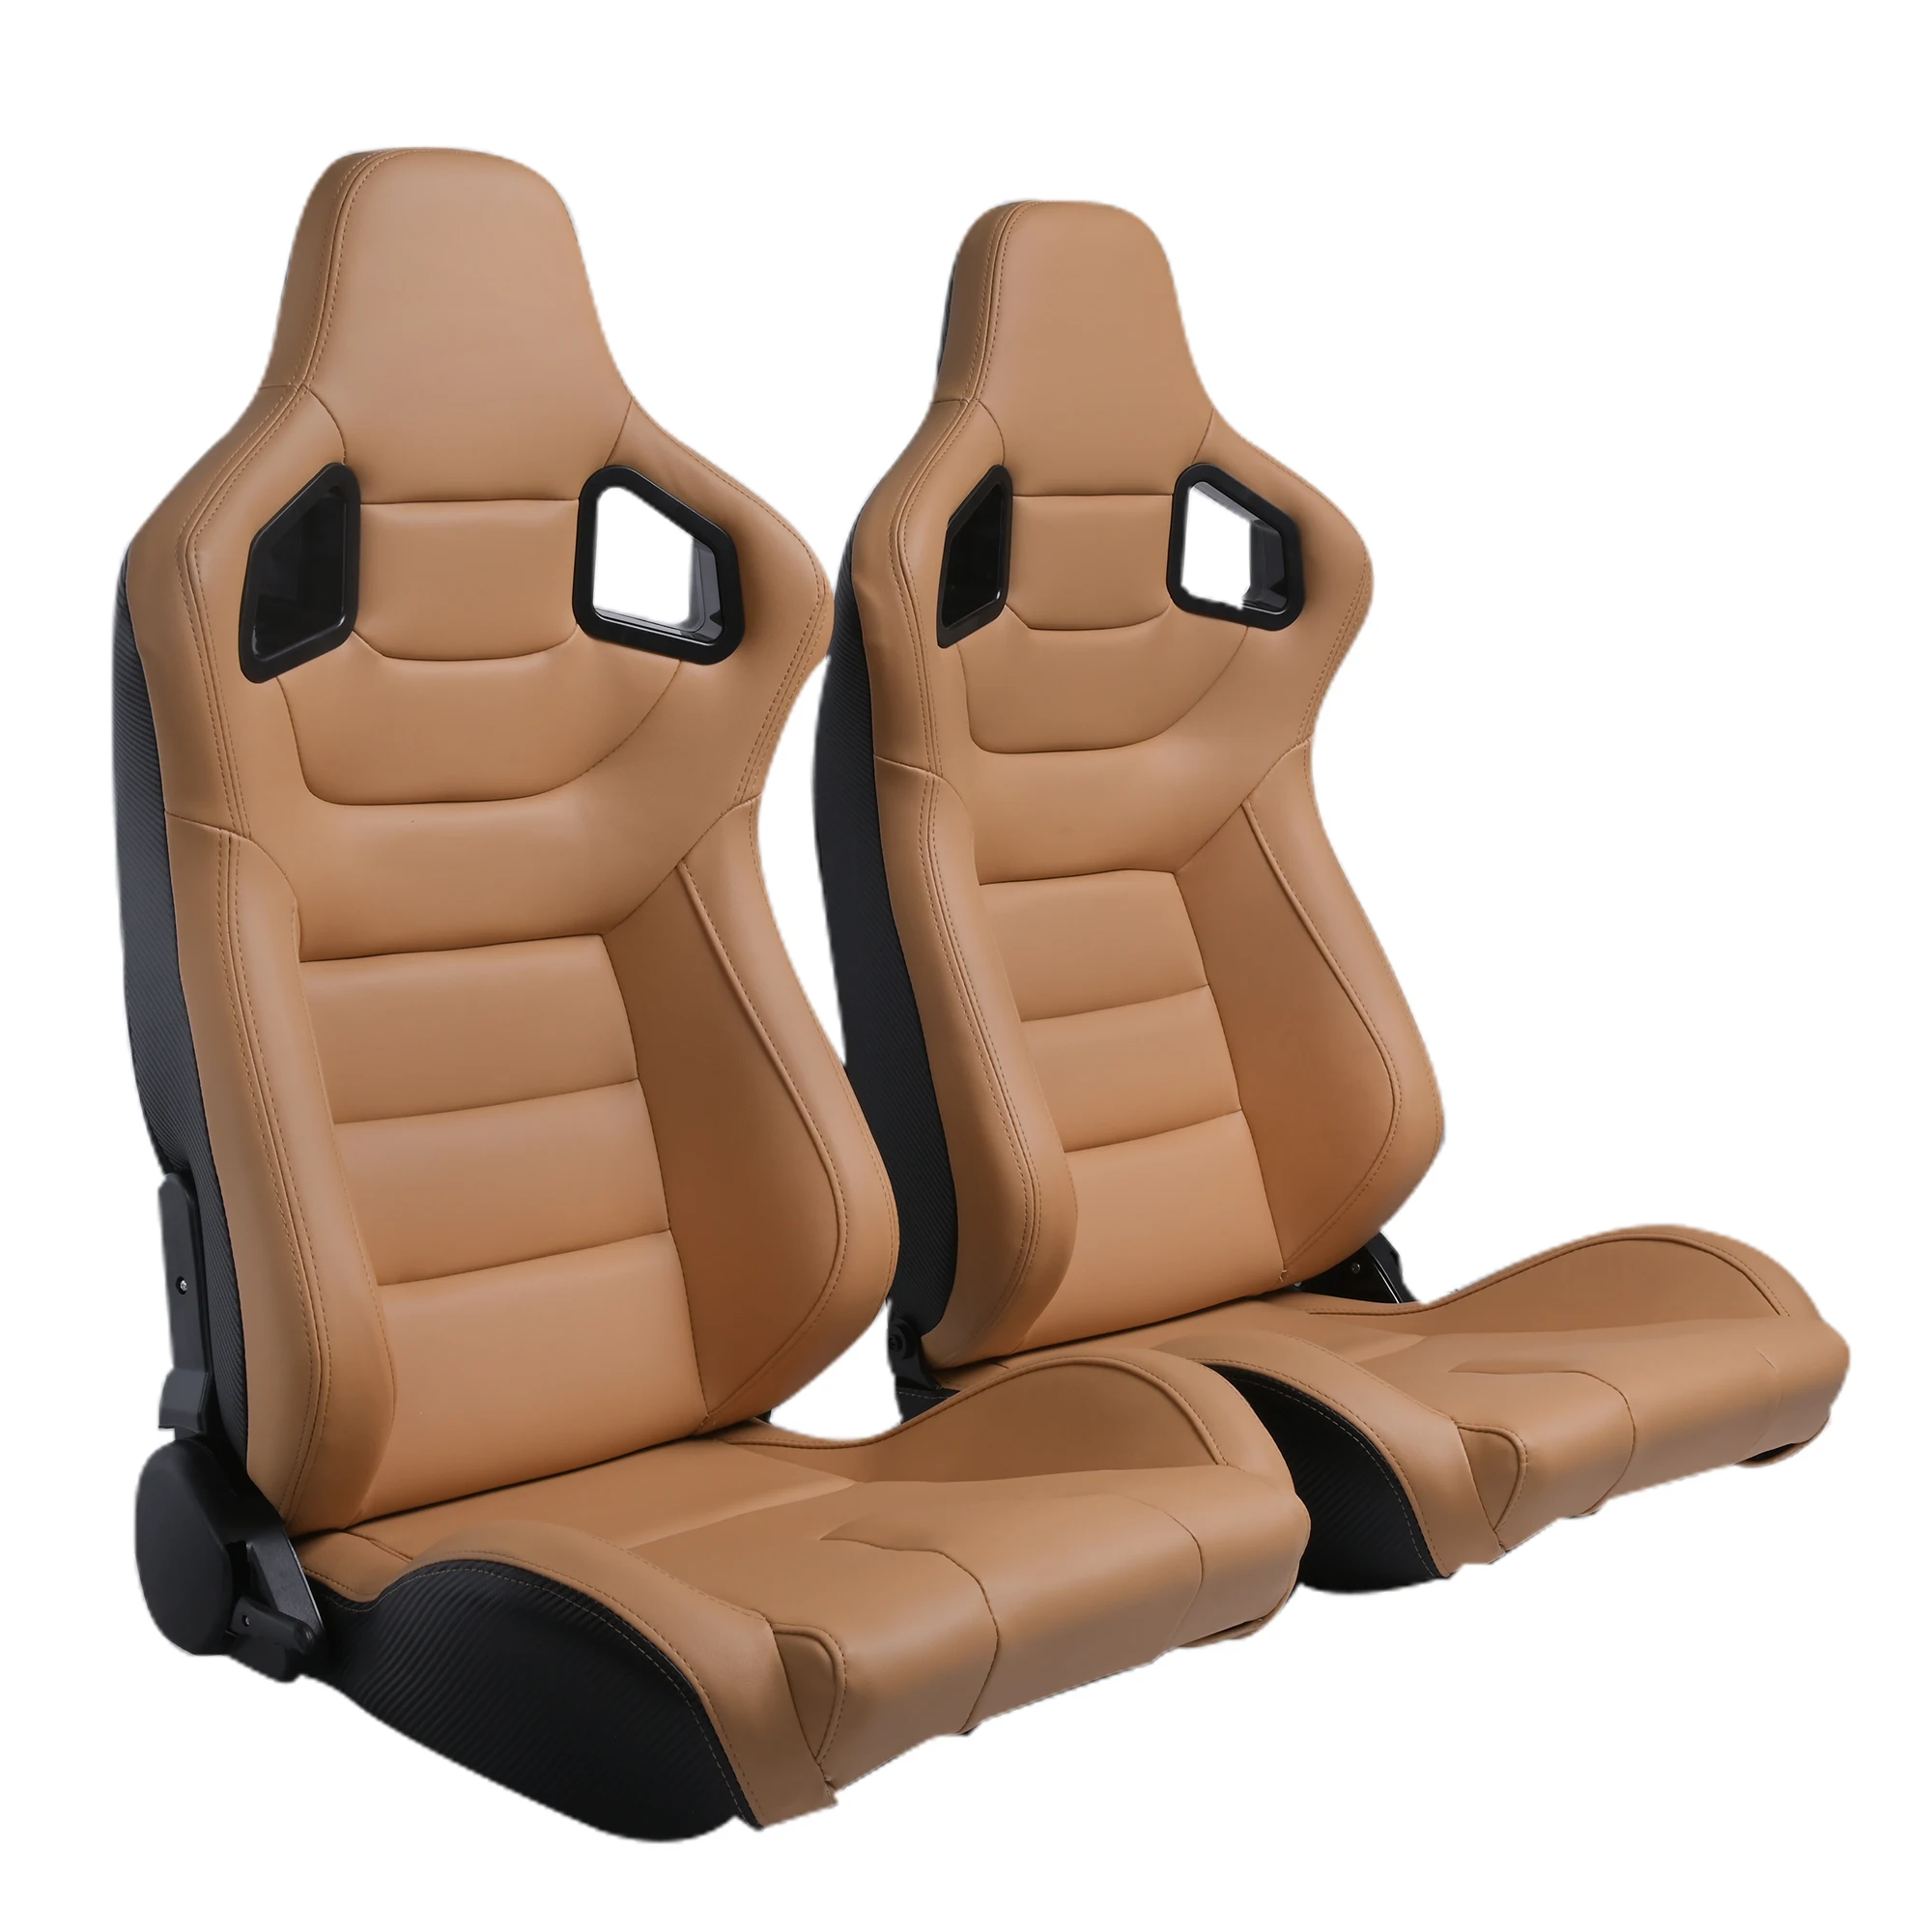 JBR1041 PVC leather carbon look sport tan Color bucket racing seats